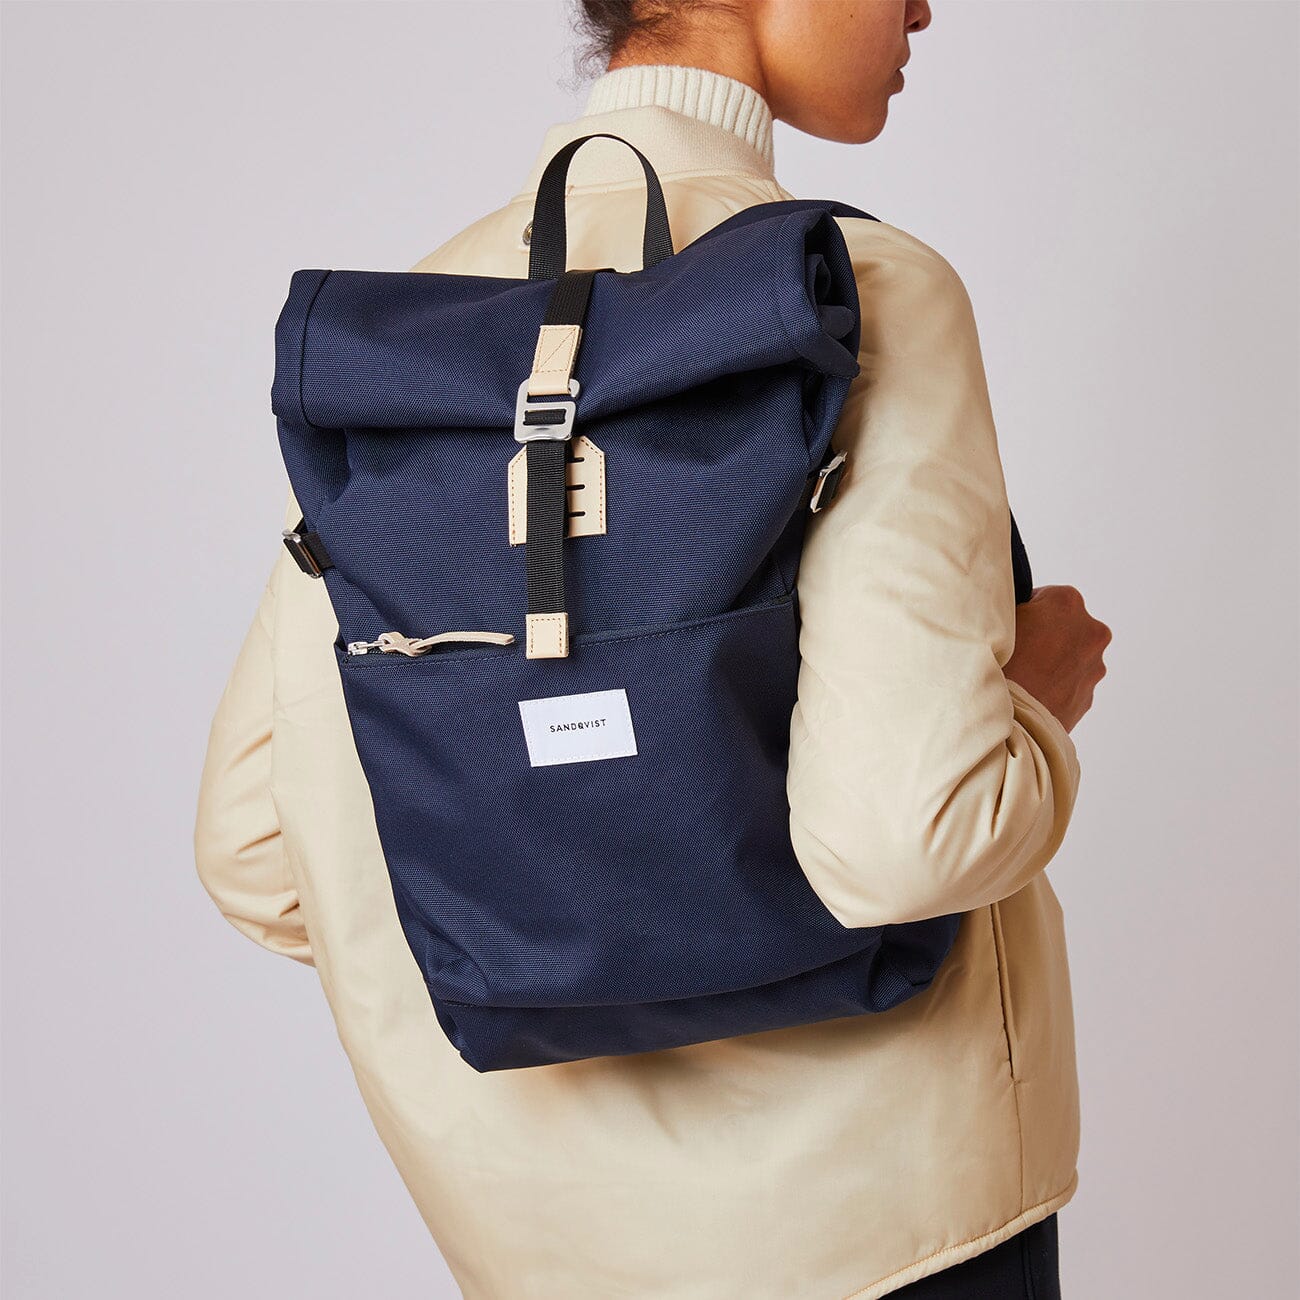 femme portant petit sac à dos roll top recyclé bleu